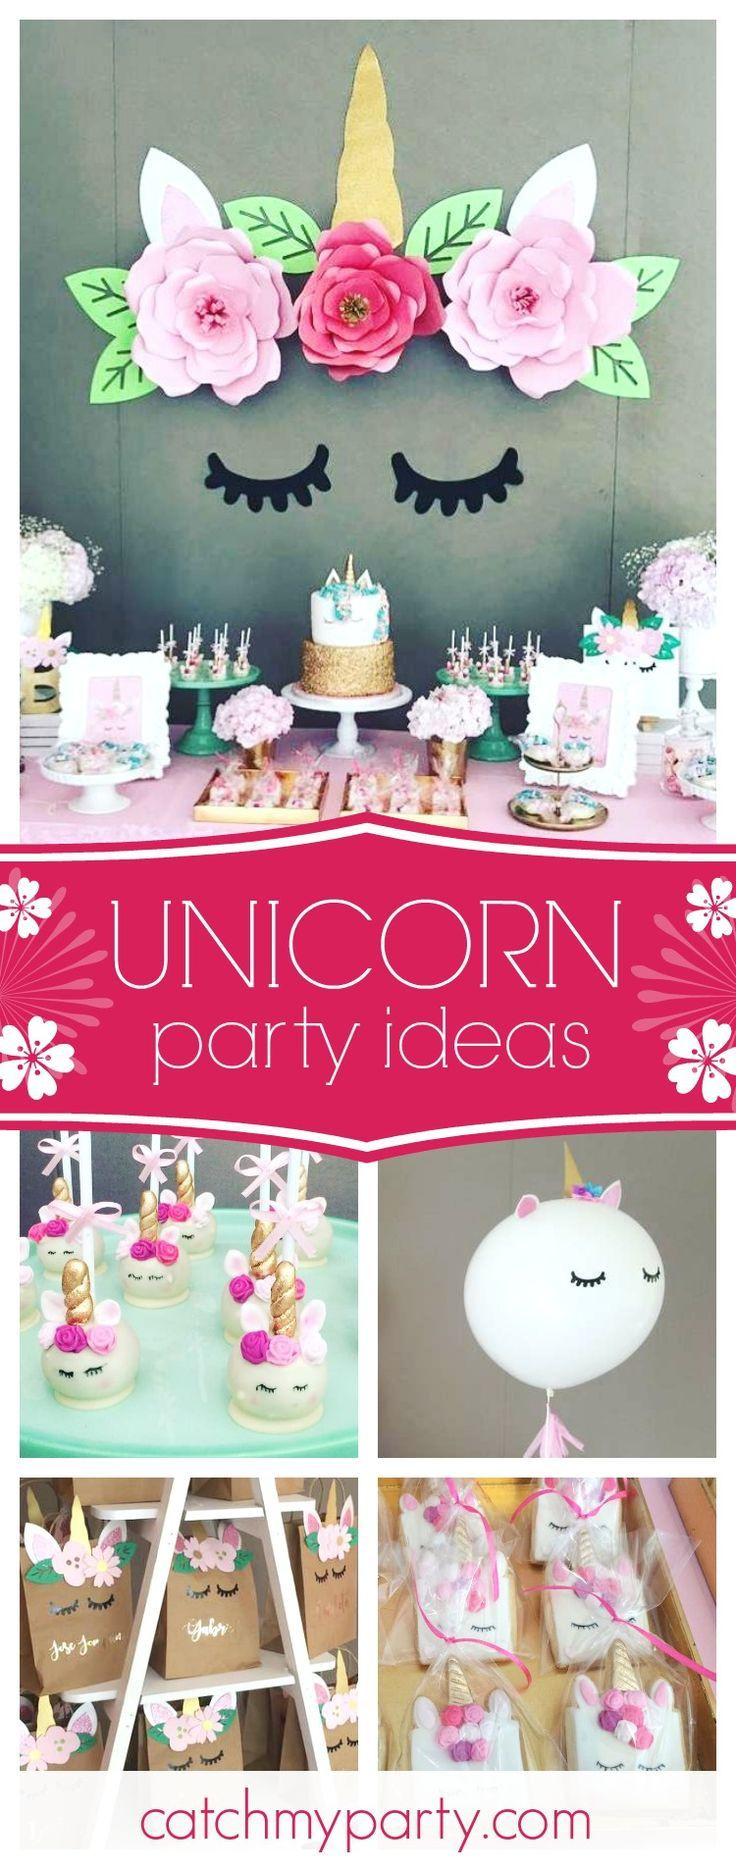 Unicorn Birthday Party Decorations Ideas
 Best 25 Unicorn birthday parties ideas on Pinterest